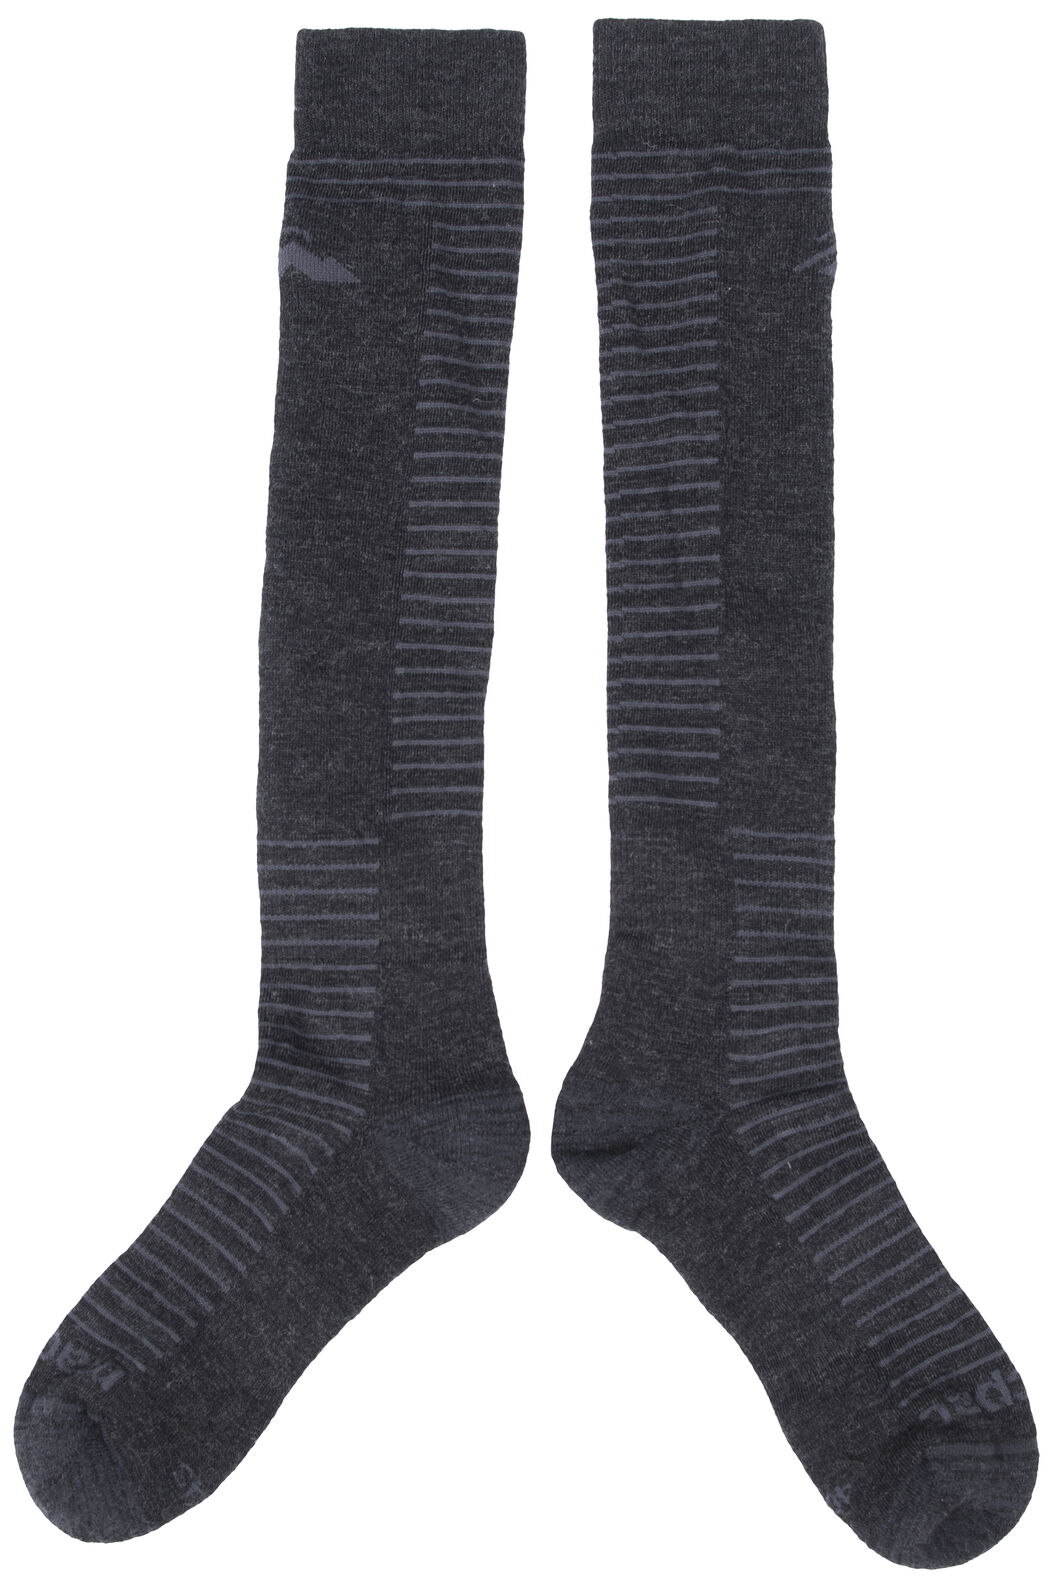 Macpac Merino Ski Socks | Macpac